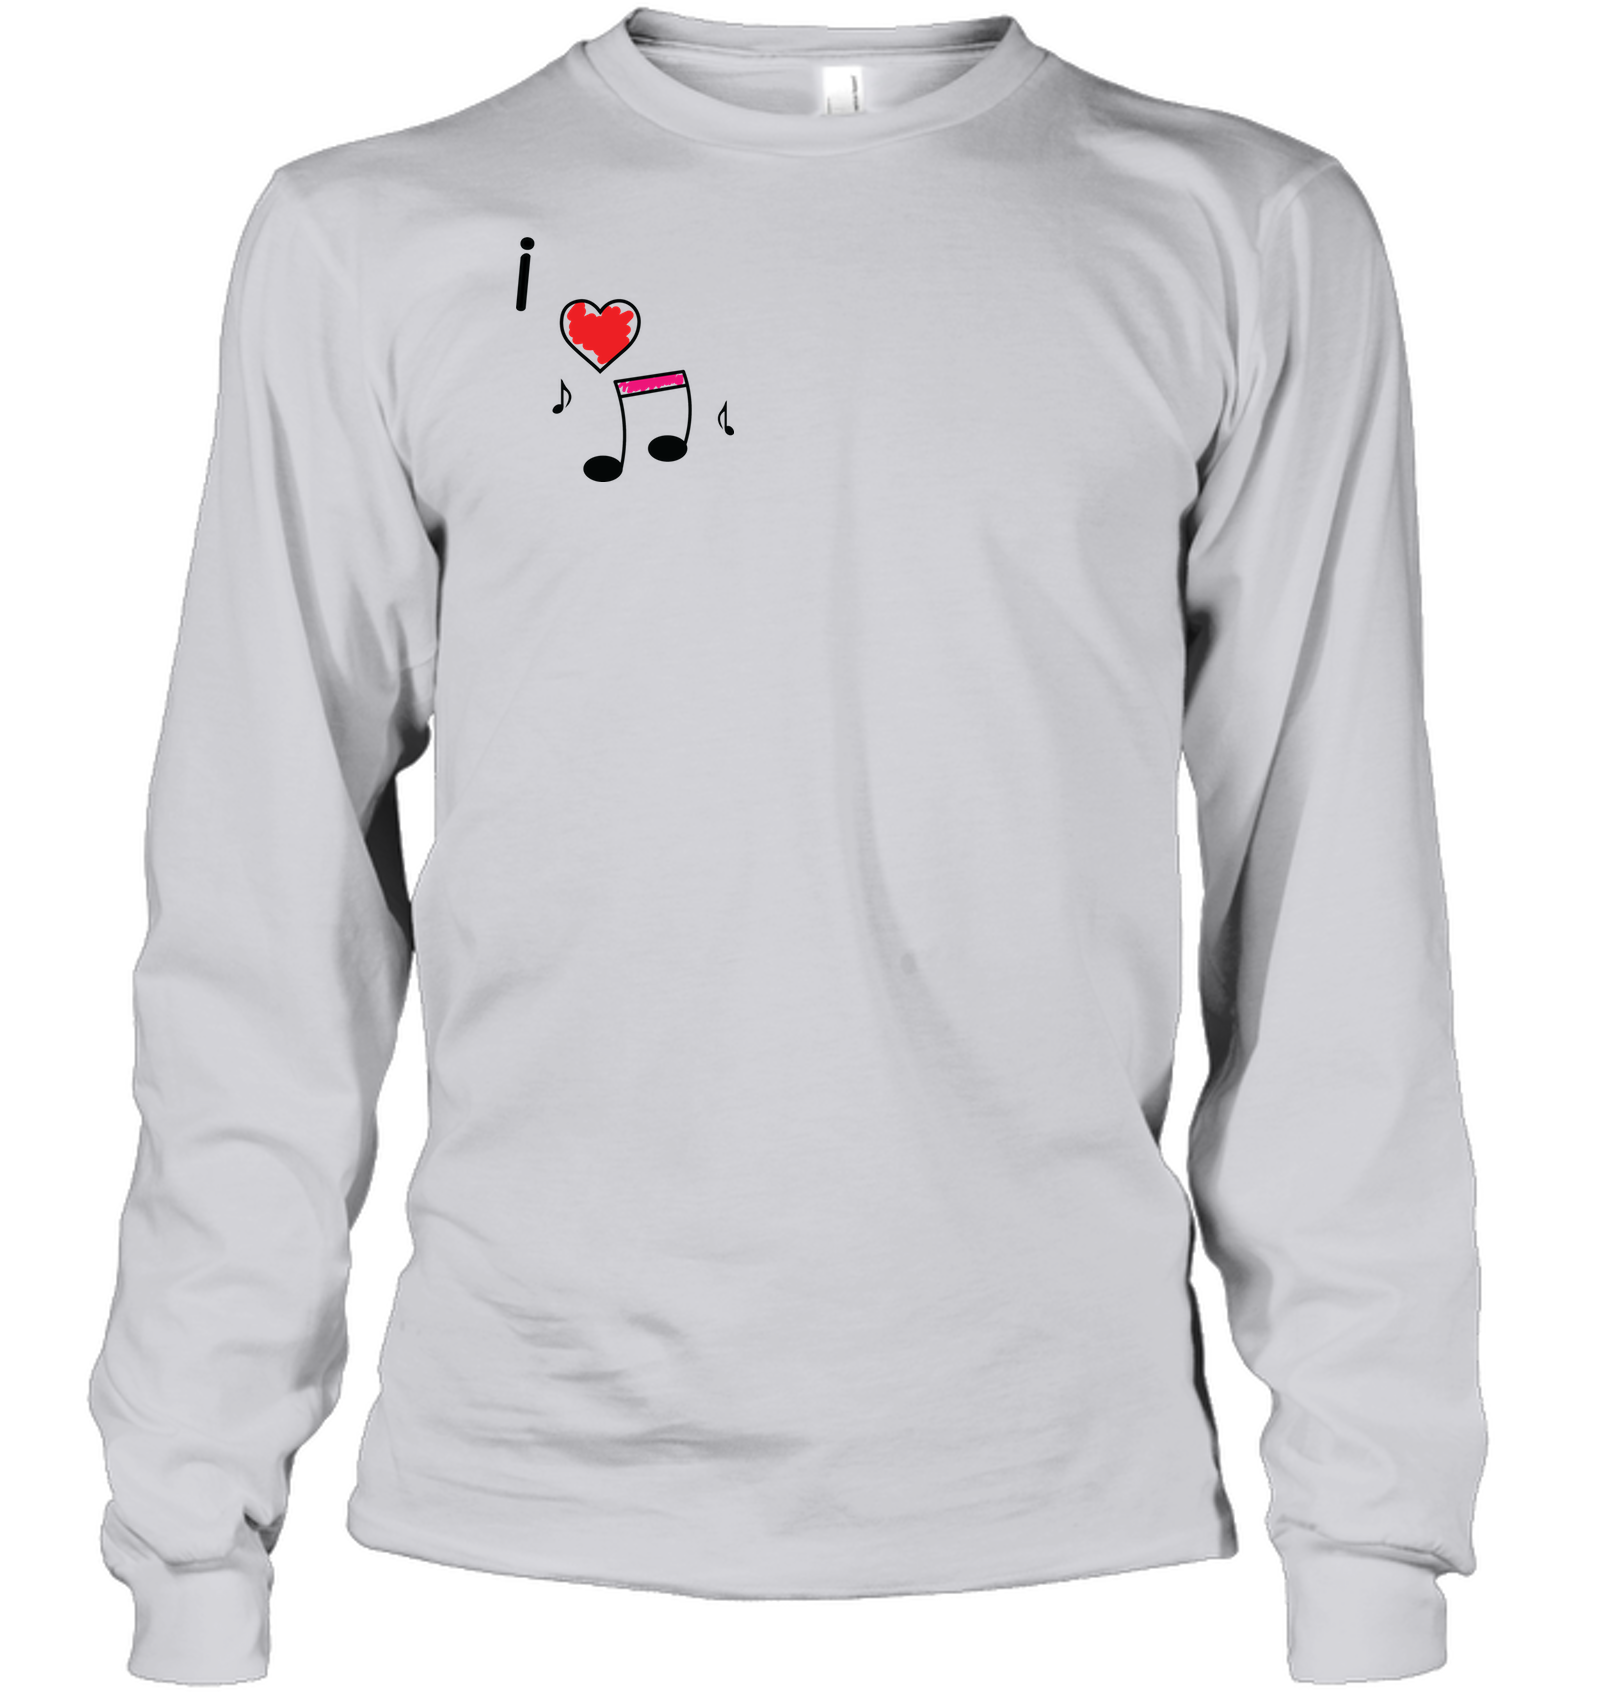 I Love Music Hearts and Fun (Pocket Size) - Gildan Adult Classic Long Sleeve T-Shirt